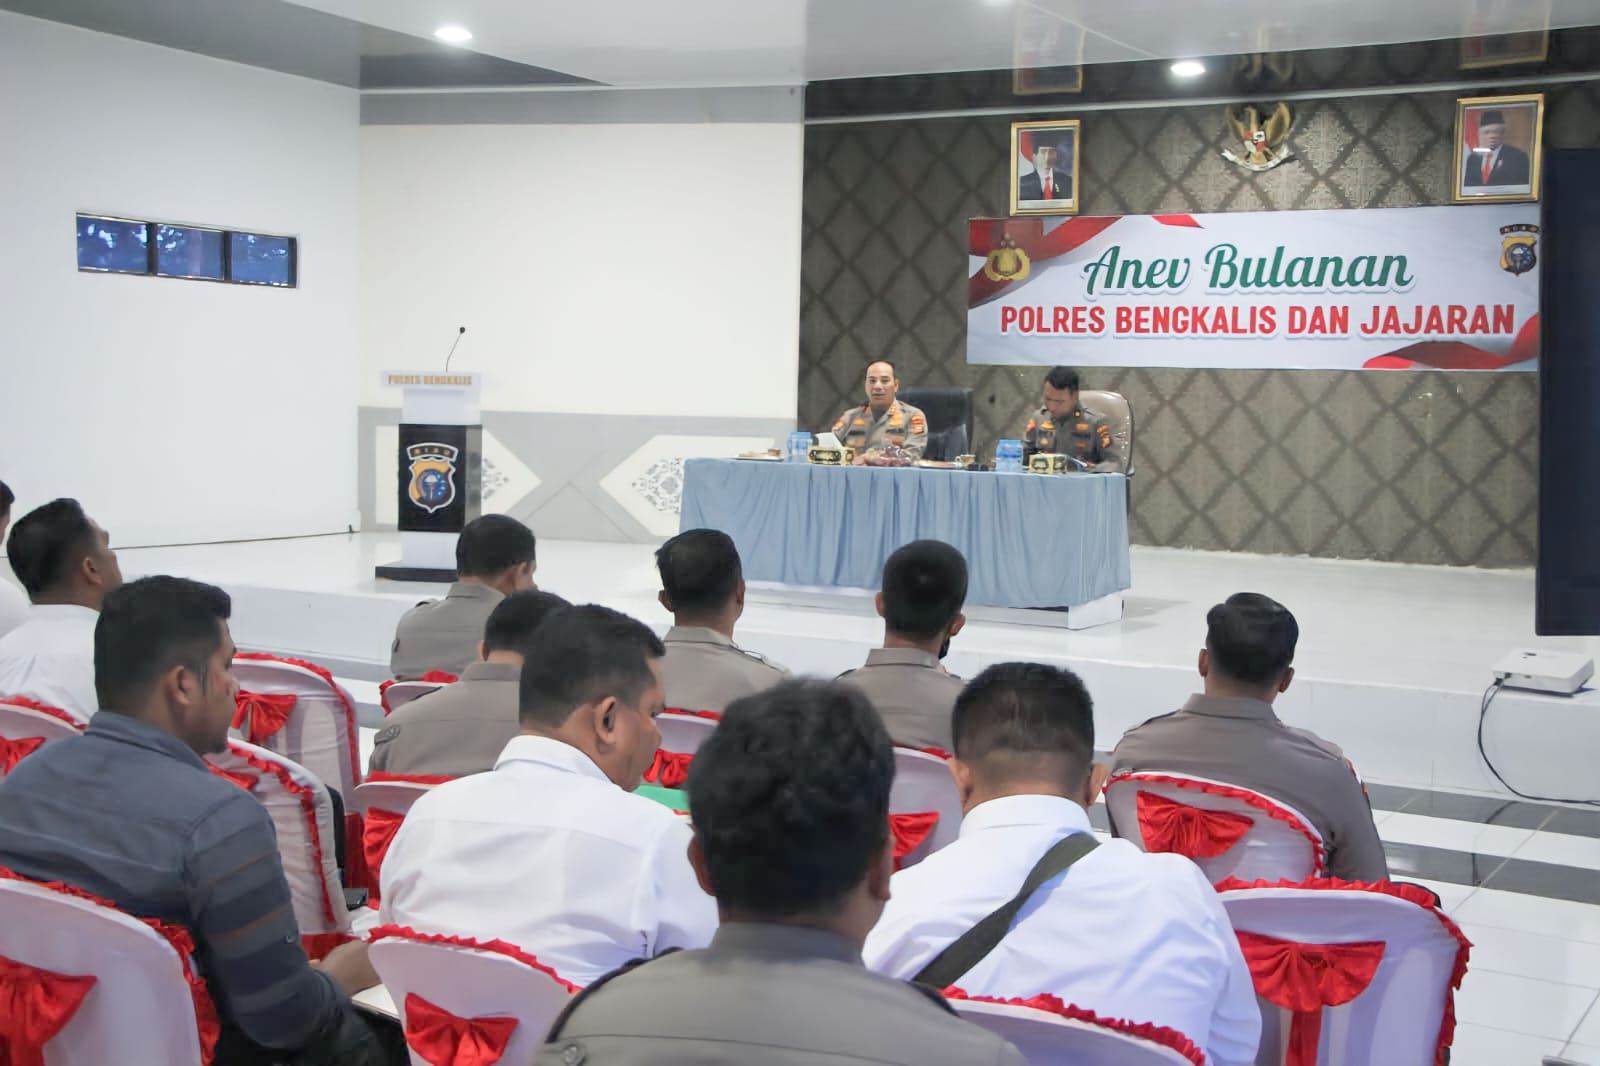 Evaluasi Kinerja Jajaran, Kapolres Bengkalis AKBP Indra Wijatmiko Pimpin Anev Bulanan